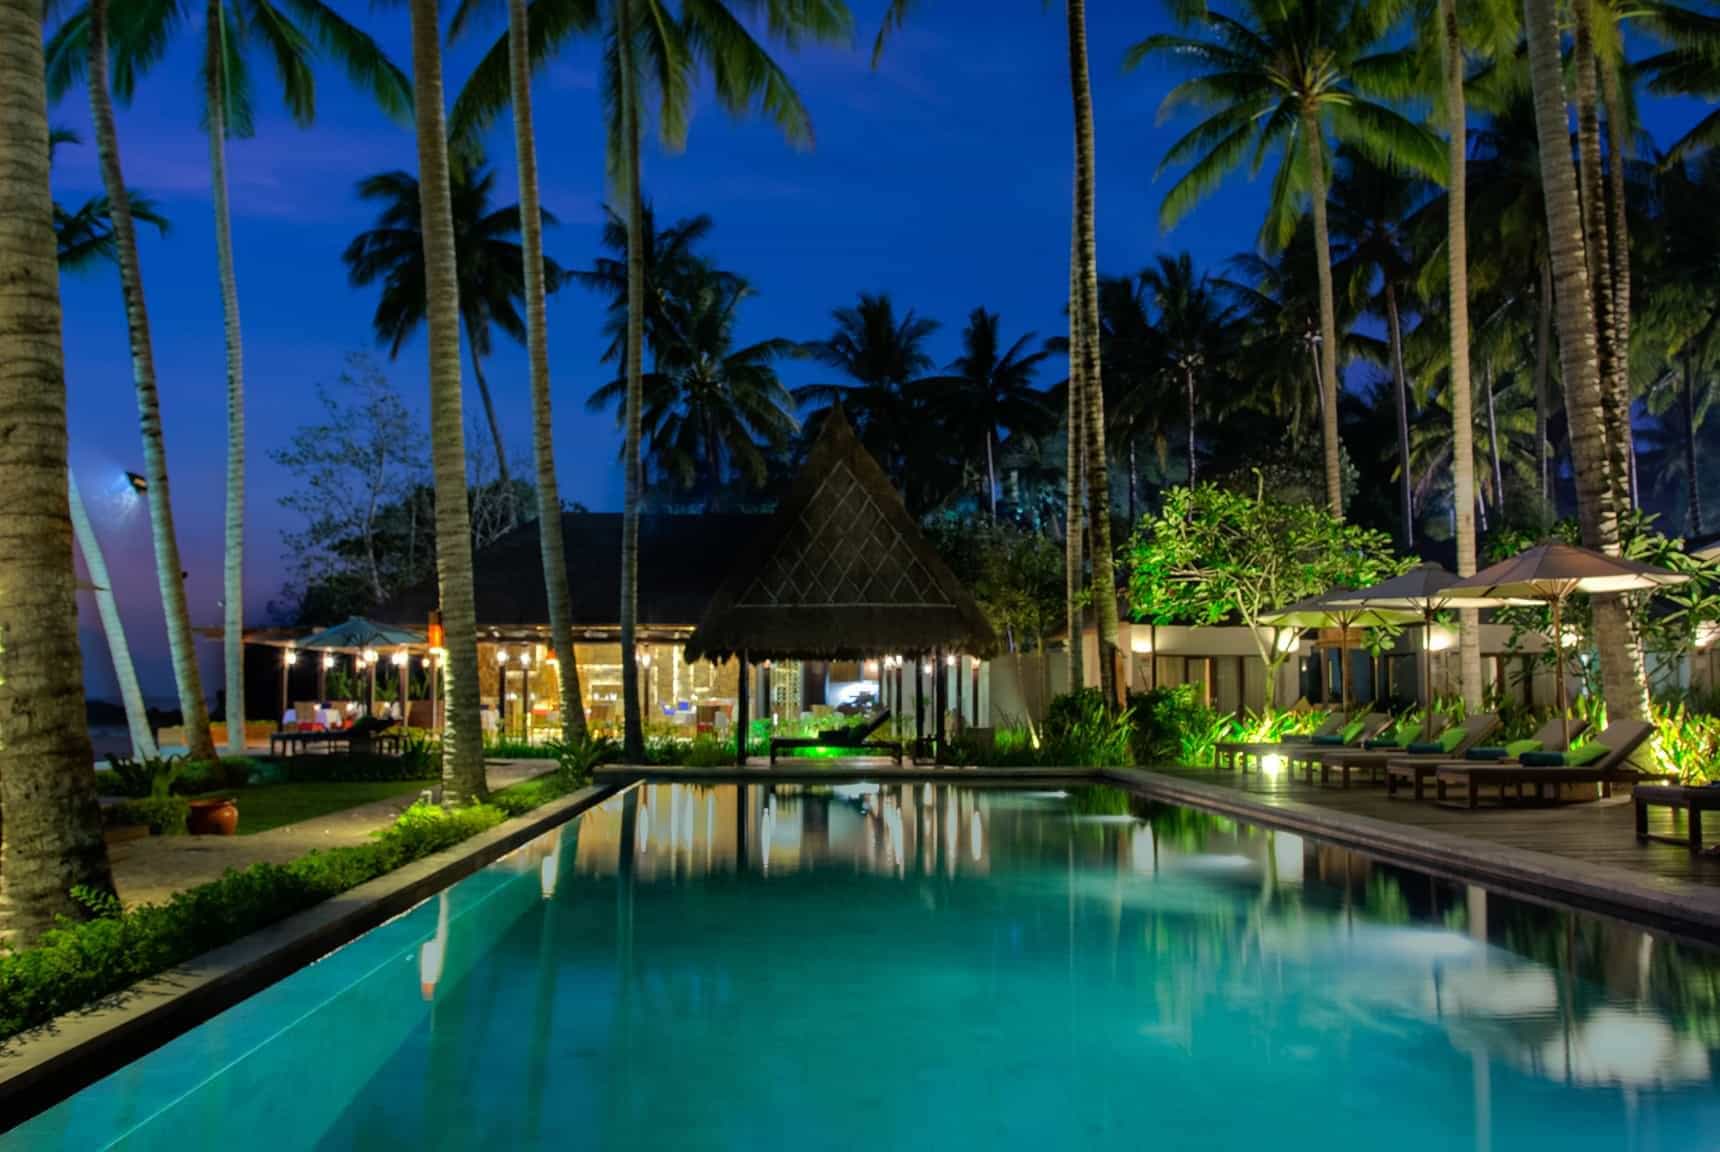 The Chandi - Batu Layar, Lombok Indonesia (Bali hotel photography by master photographer Rick Carmichael of LuxViz)